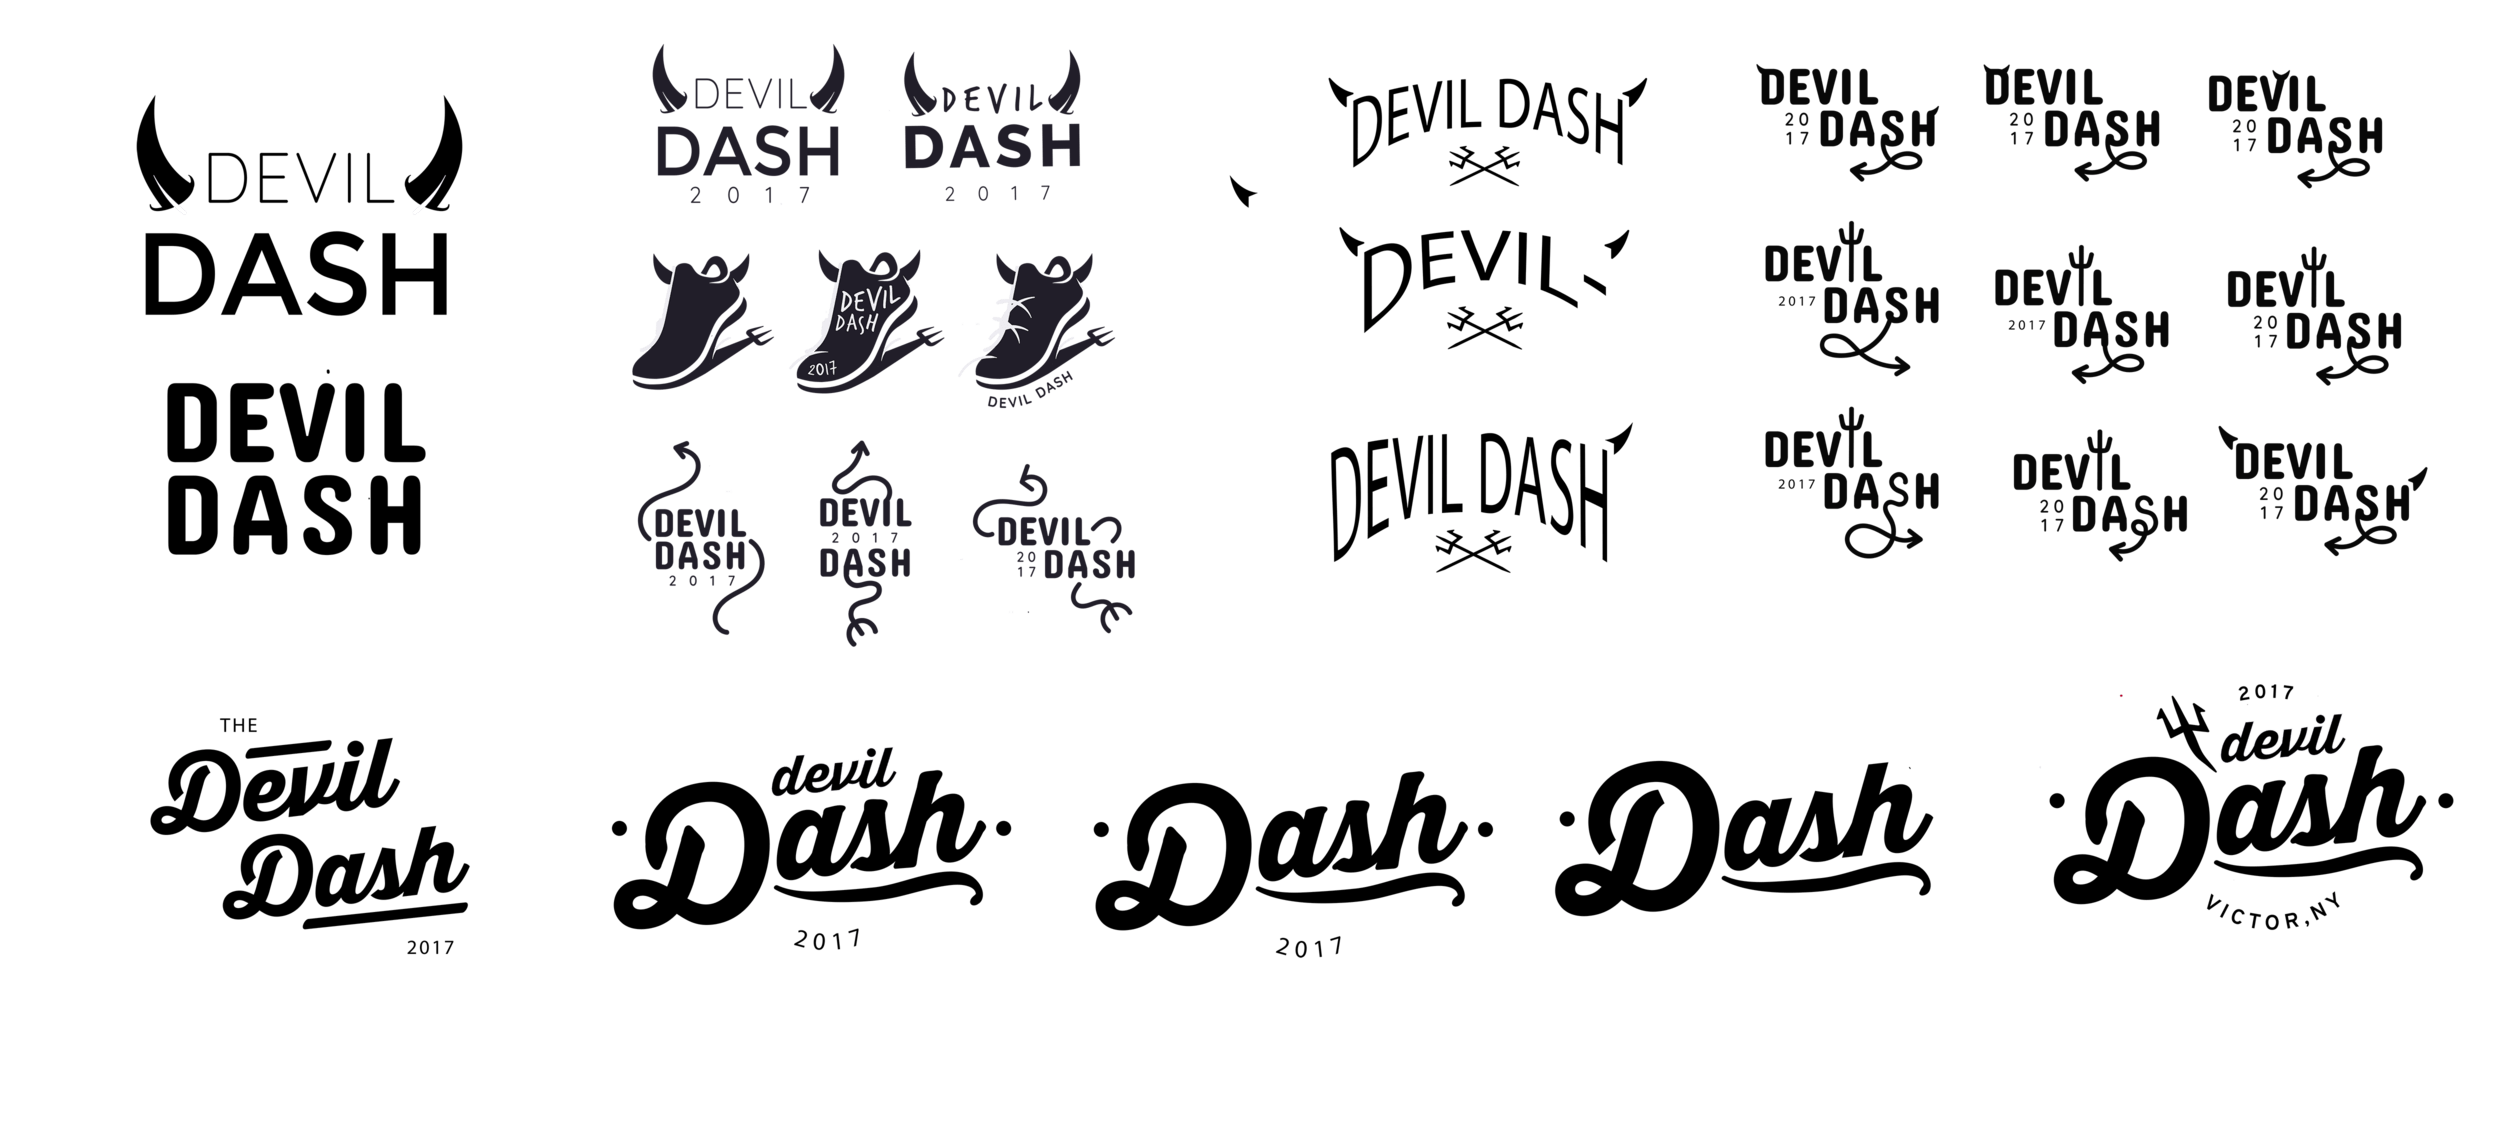 Dash Logo - Devil Dash Logo — emma seager